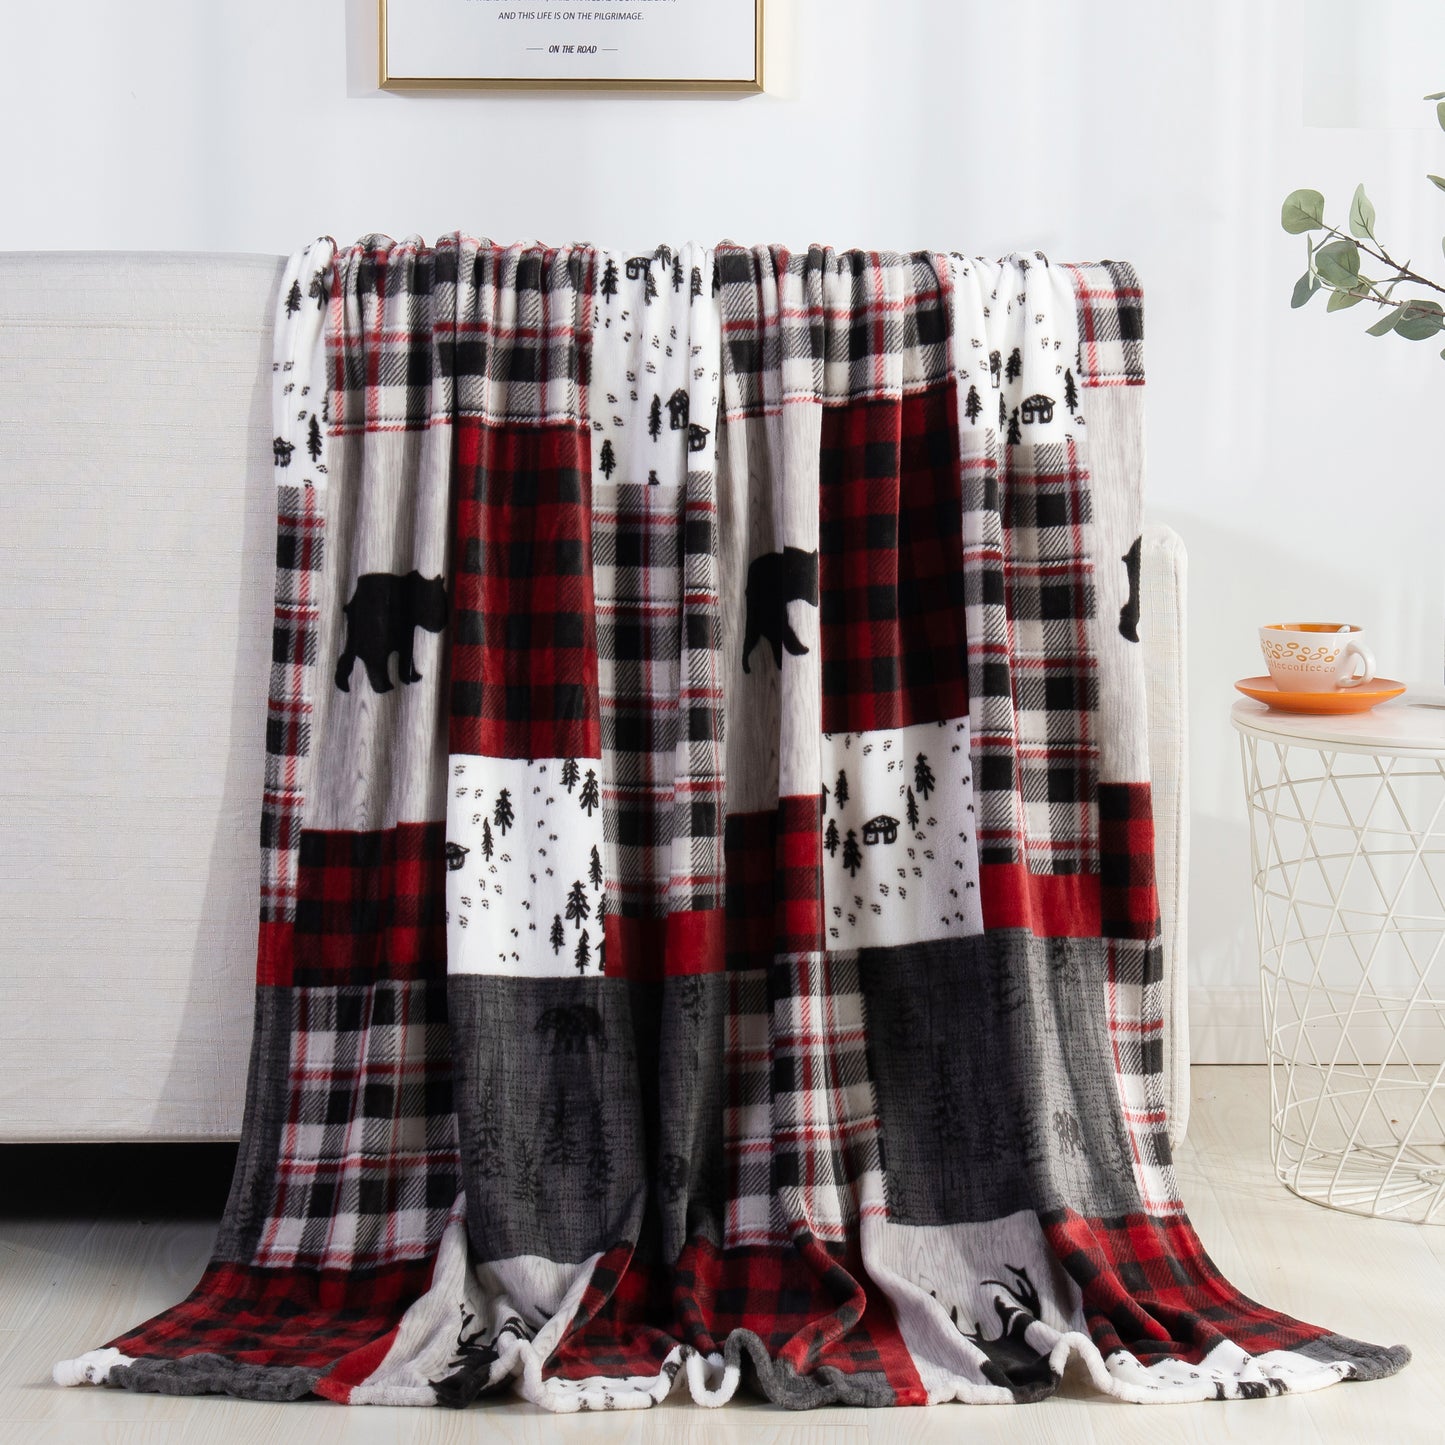 Elegant Comfort 50" x 60" Holiday Velvet Plush Blanket Throw - 50 x 60 inches